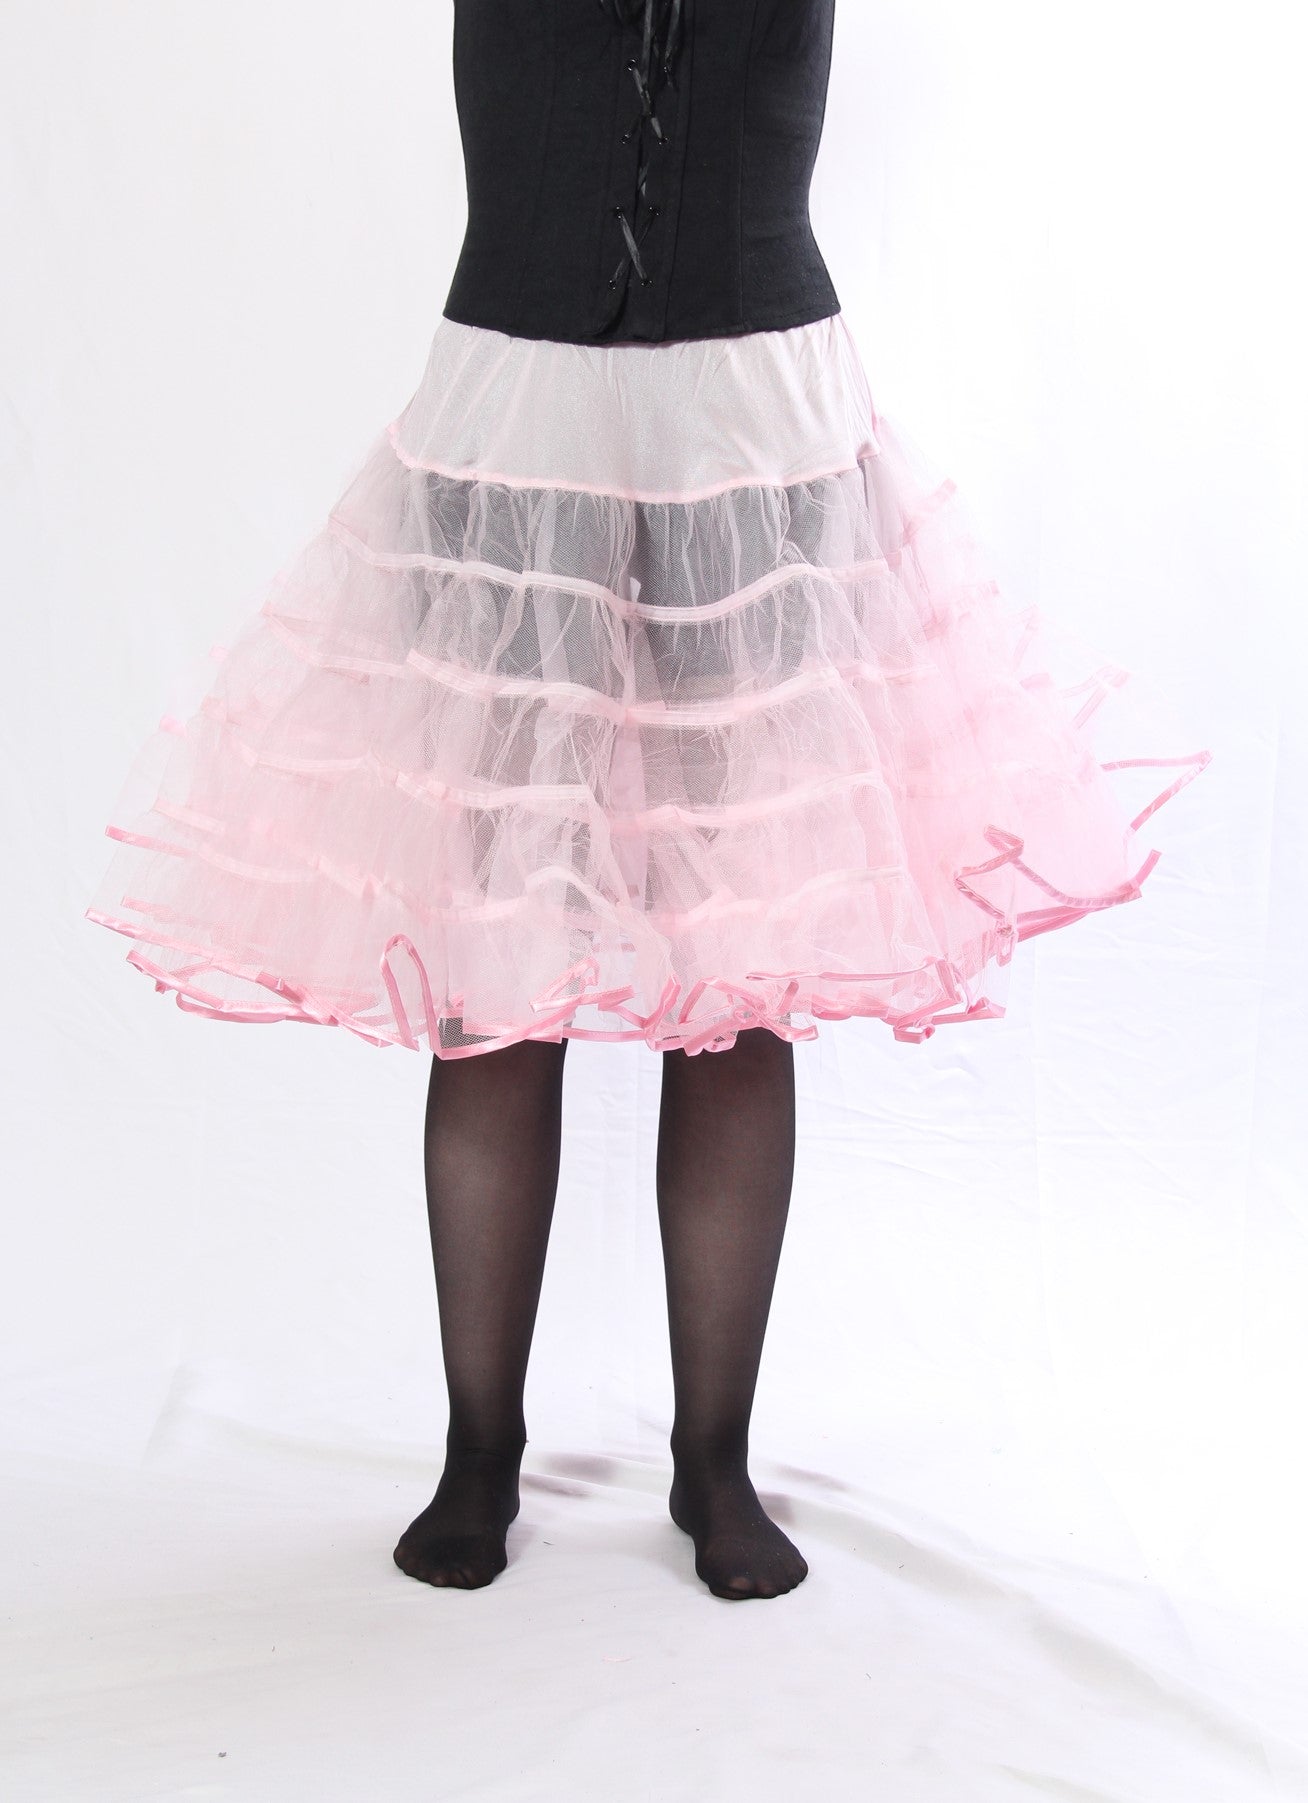 Dance Dresses, Skirts & Costumes Meghan Luxury Crinoline Slip with Adjustable Waist & Length for Rockabilly-Pink malcomodes-biz.myshopify.com